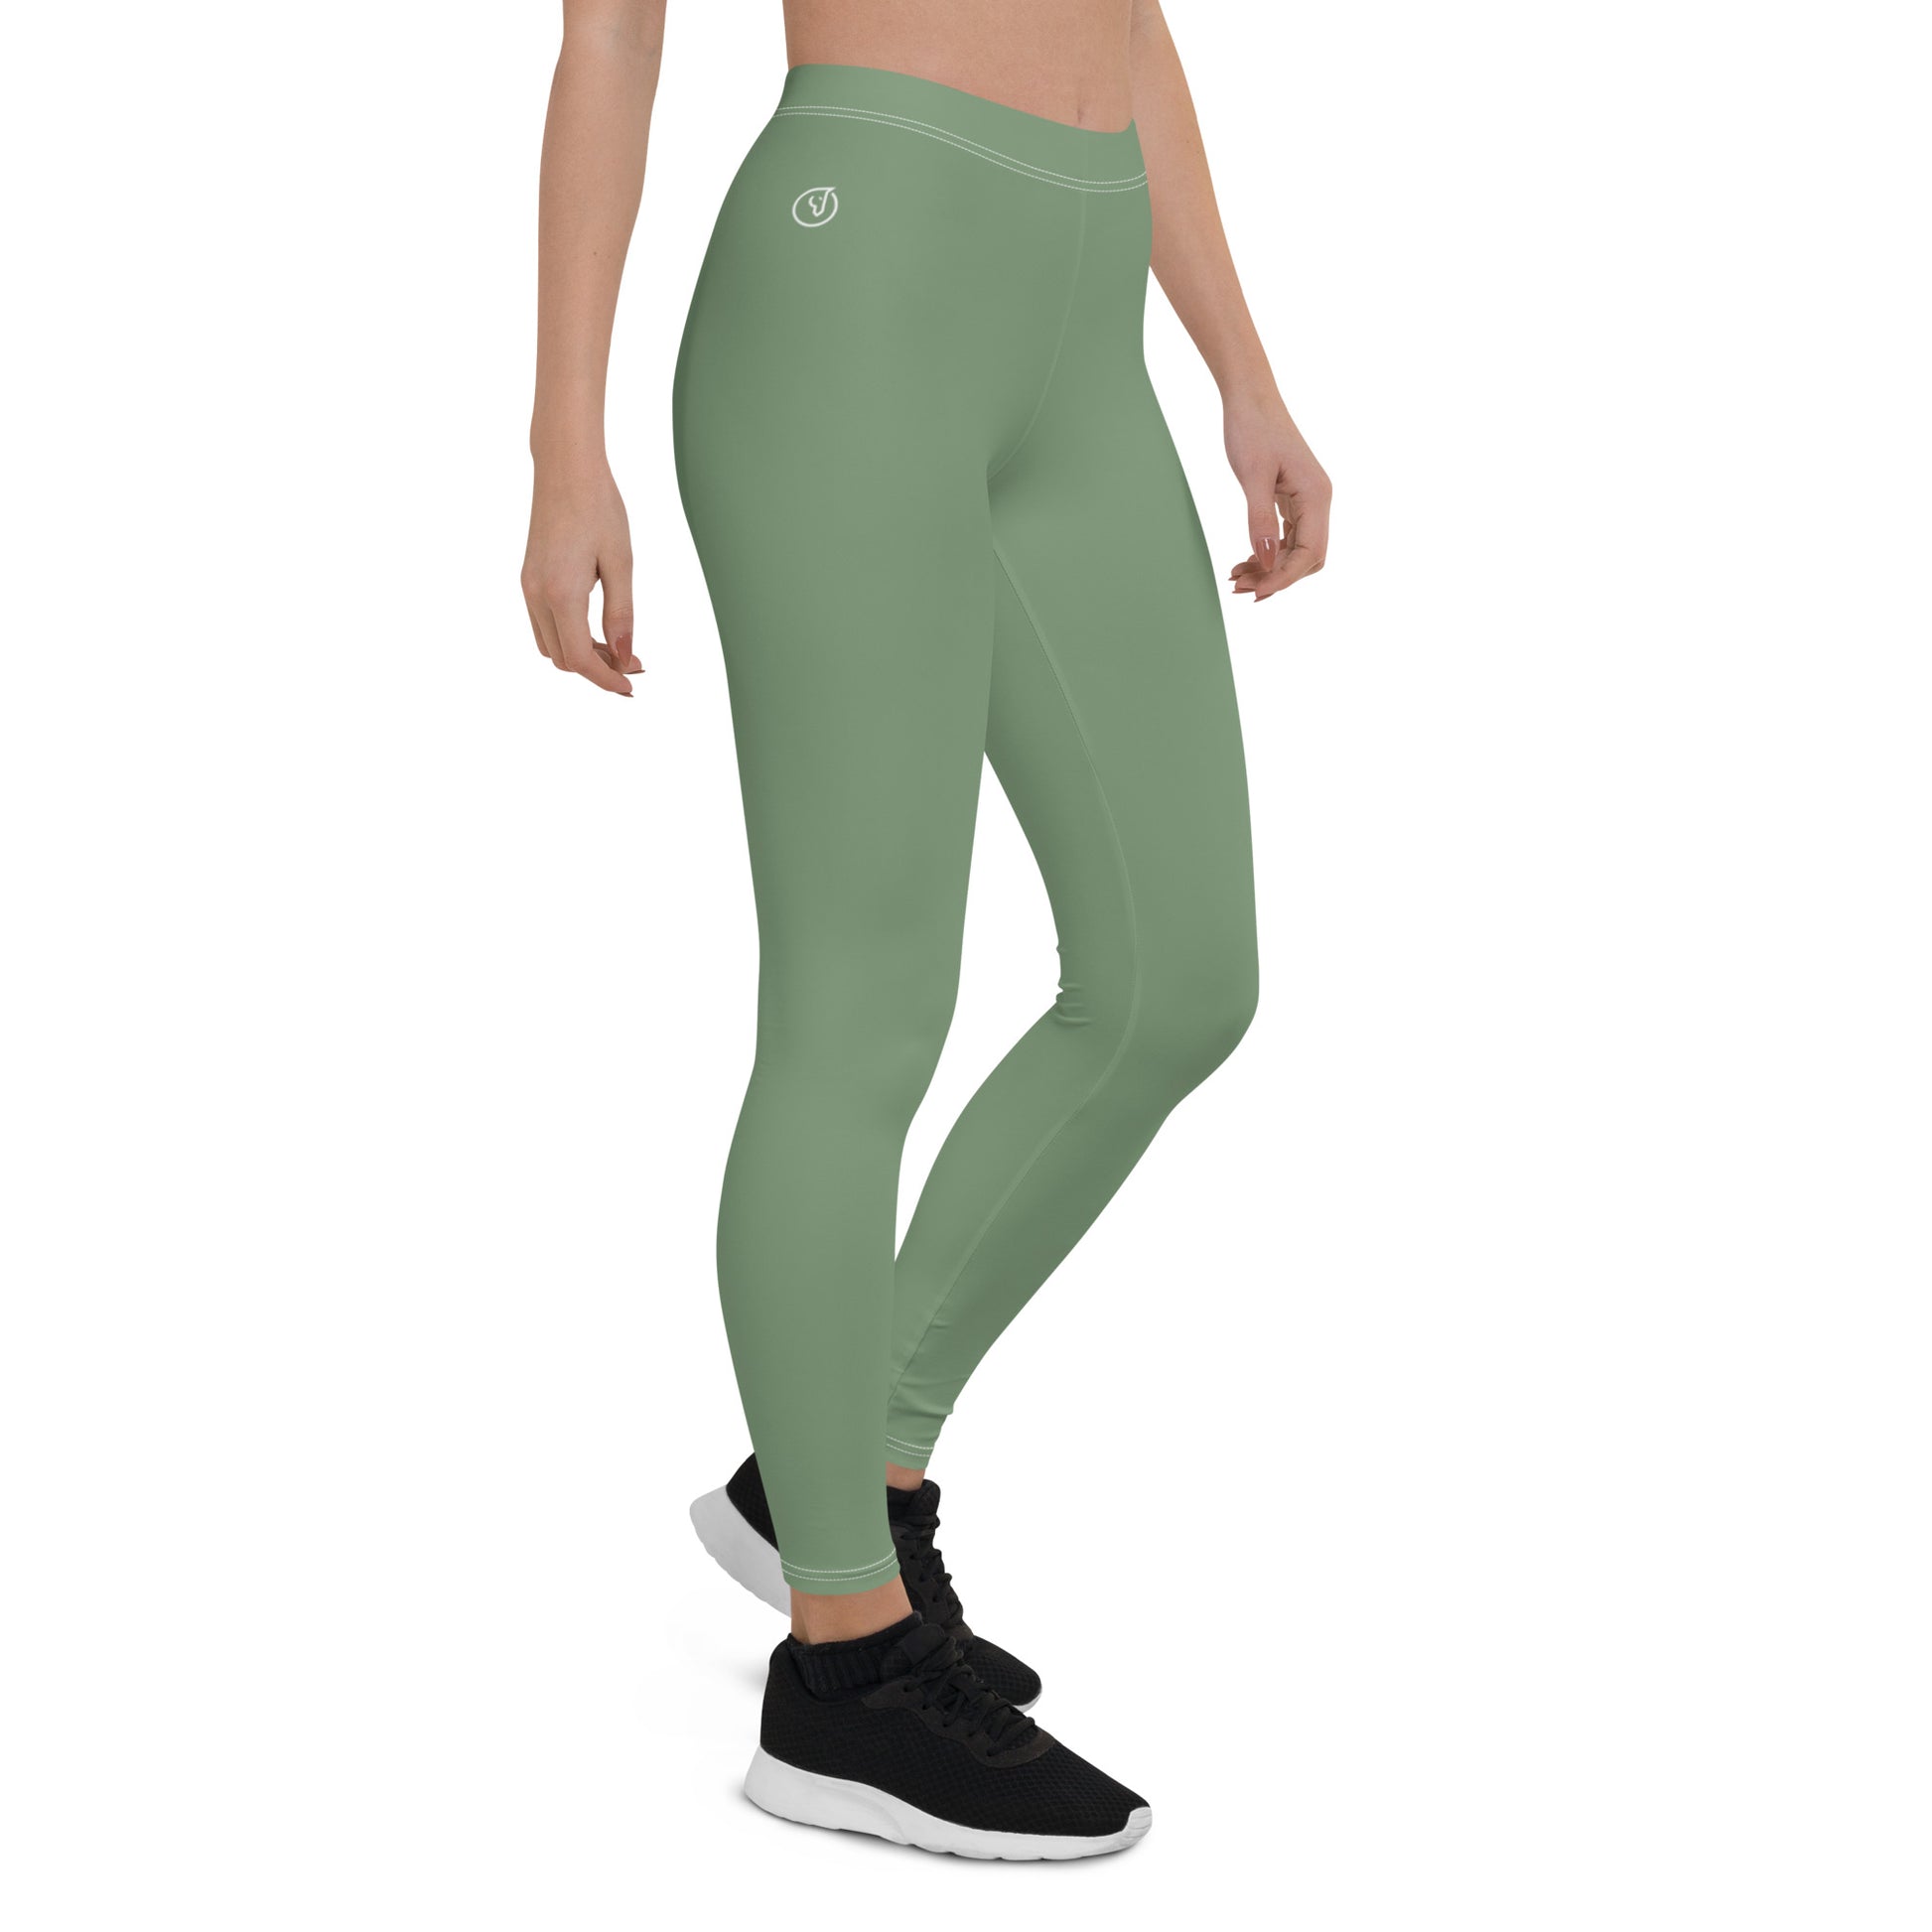 Humble Sportswear, color match leggings, women’s active spandex workout leggings